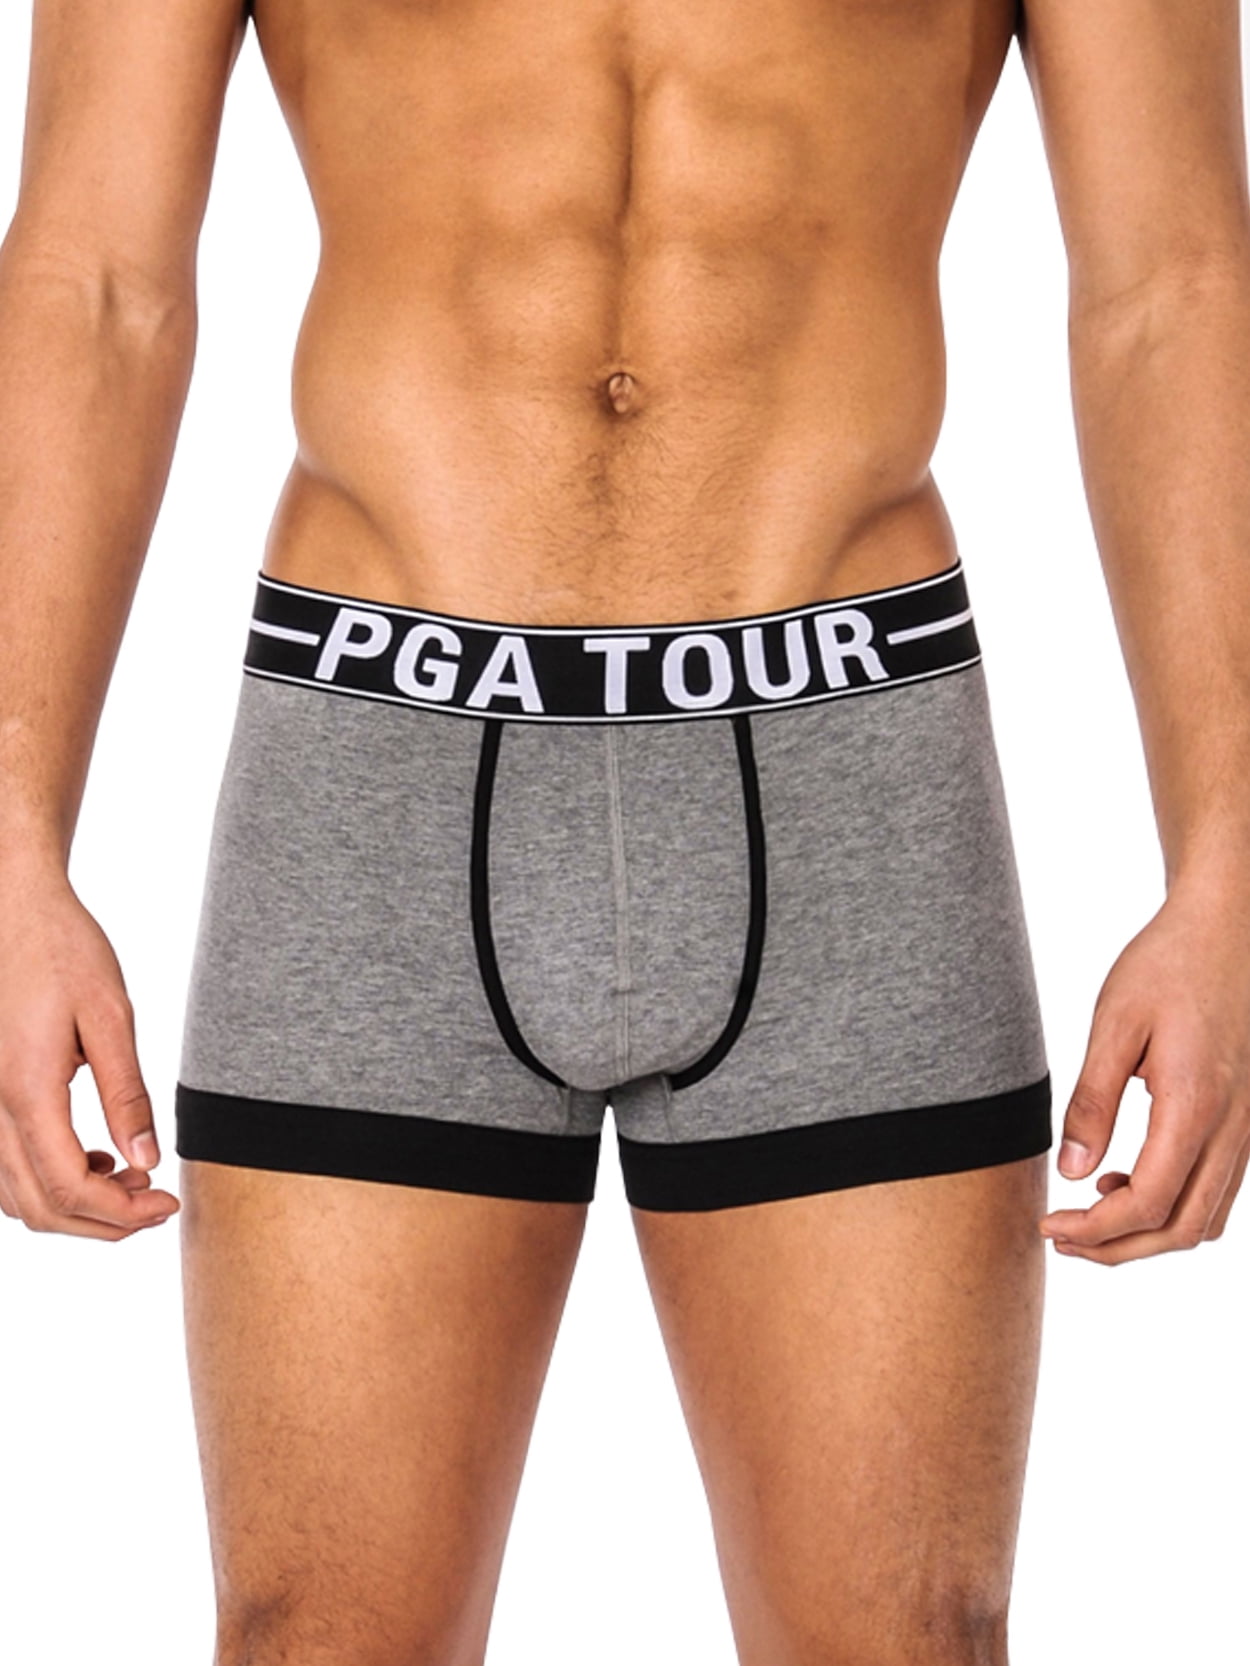 PGA Tour Men's Solid Stretch Sport Trunk Underwear (2-Pack), Large White -  